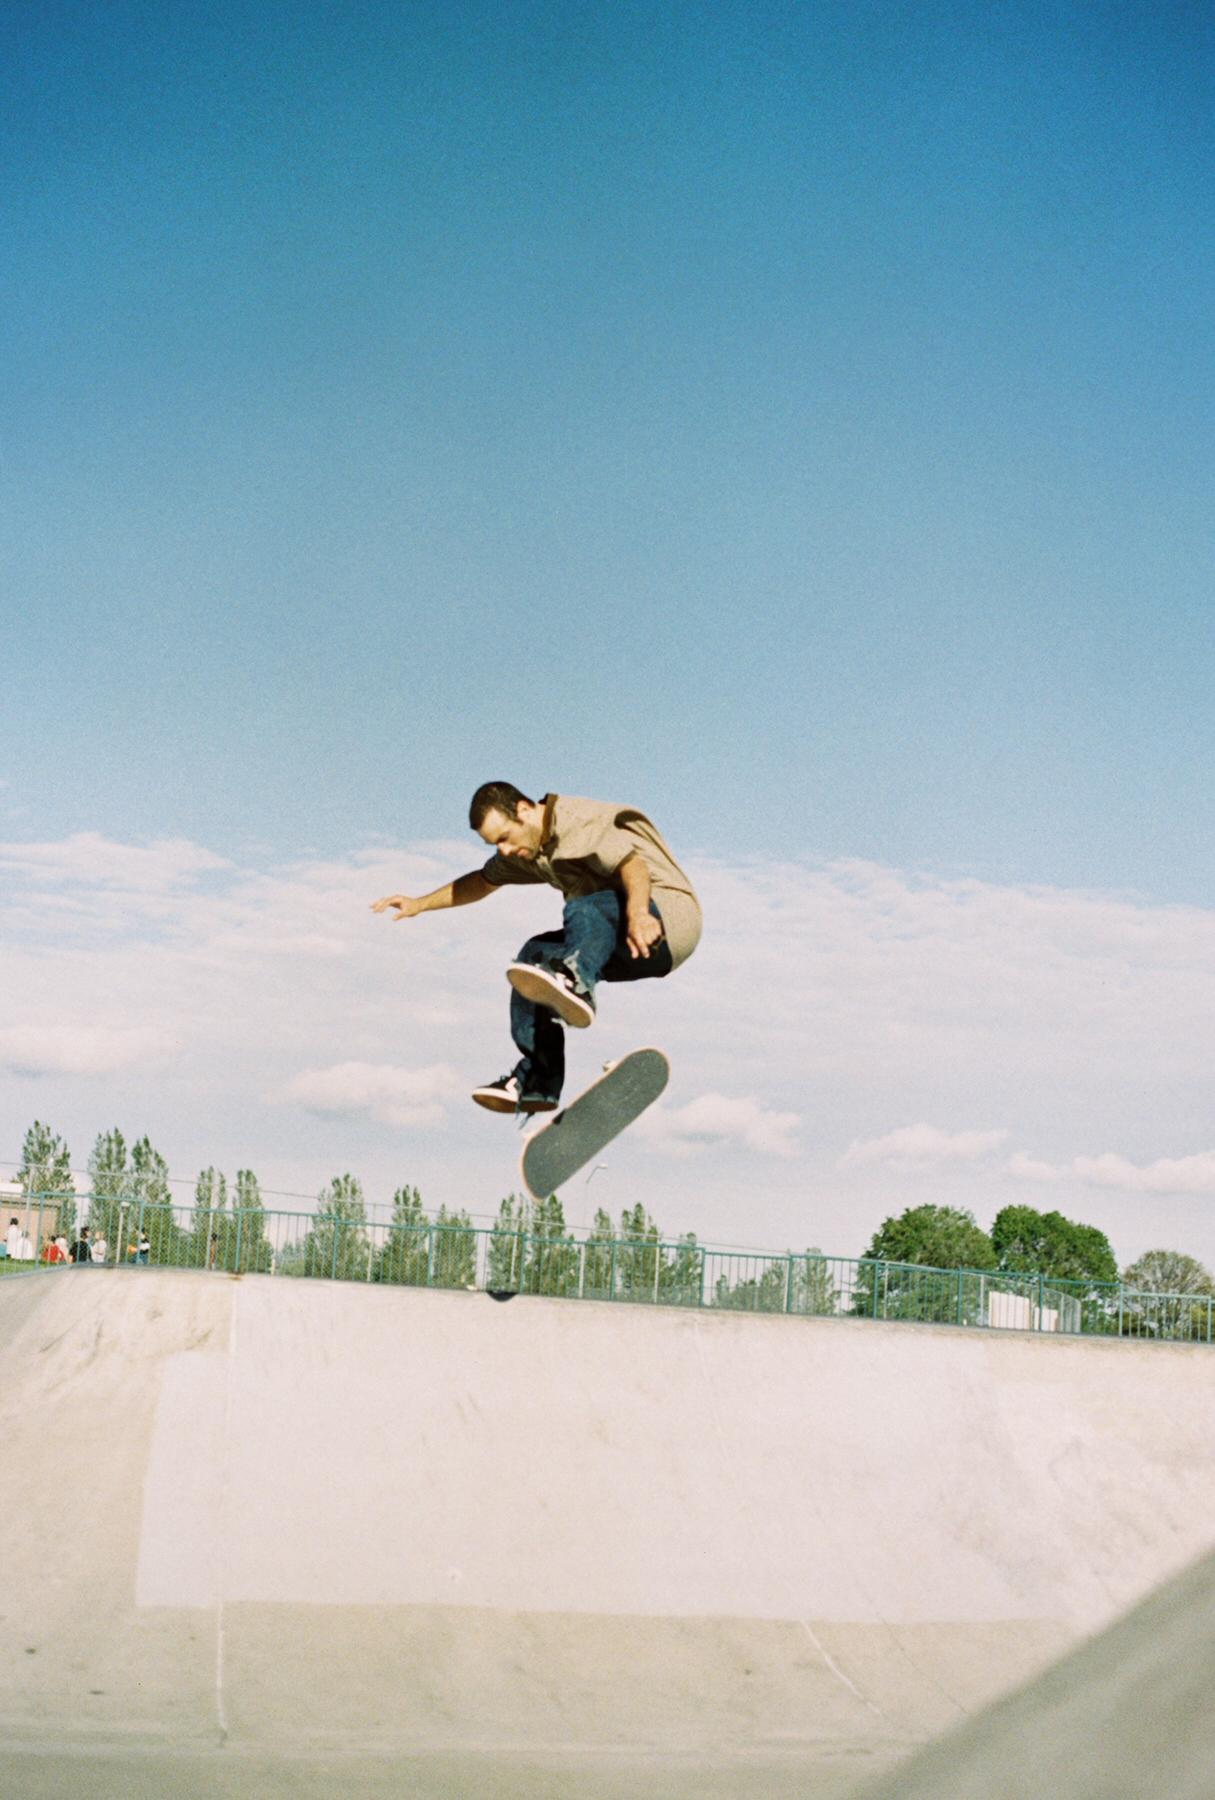 a man jumping a skate board in the air